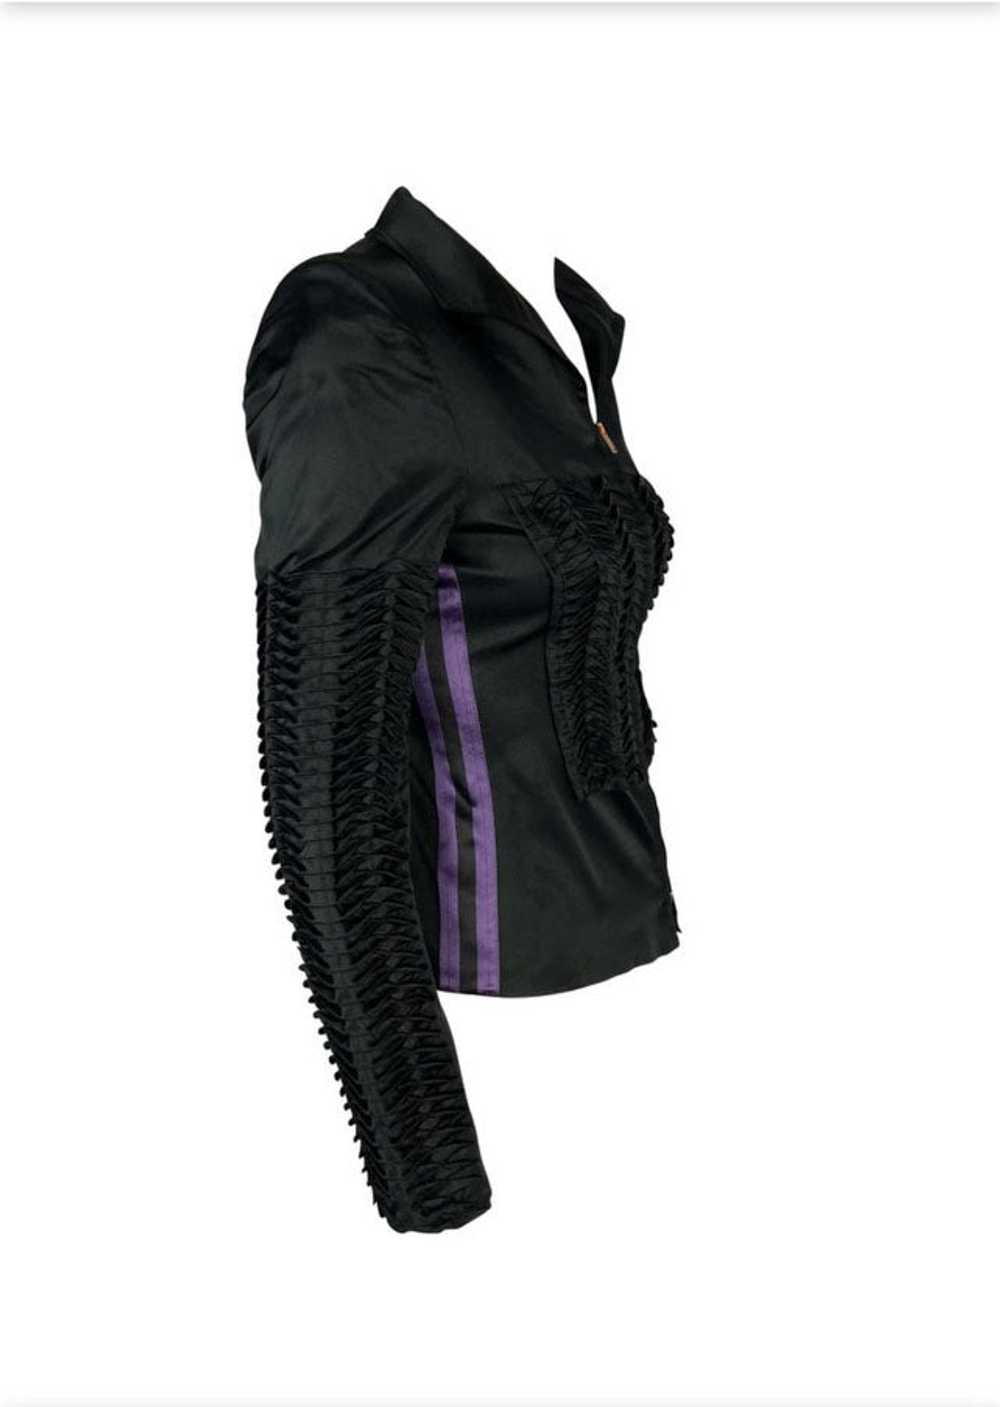 S/S 2004 GUCCI jacket corset - image 7